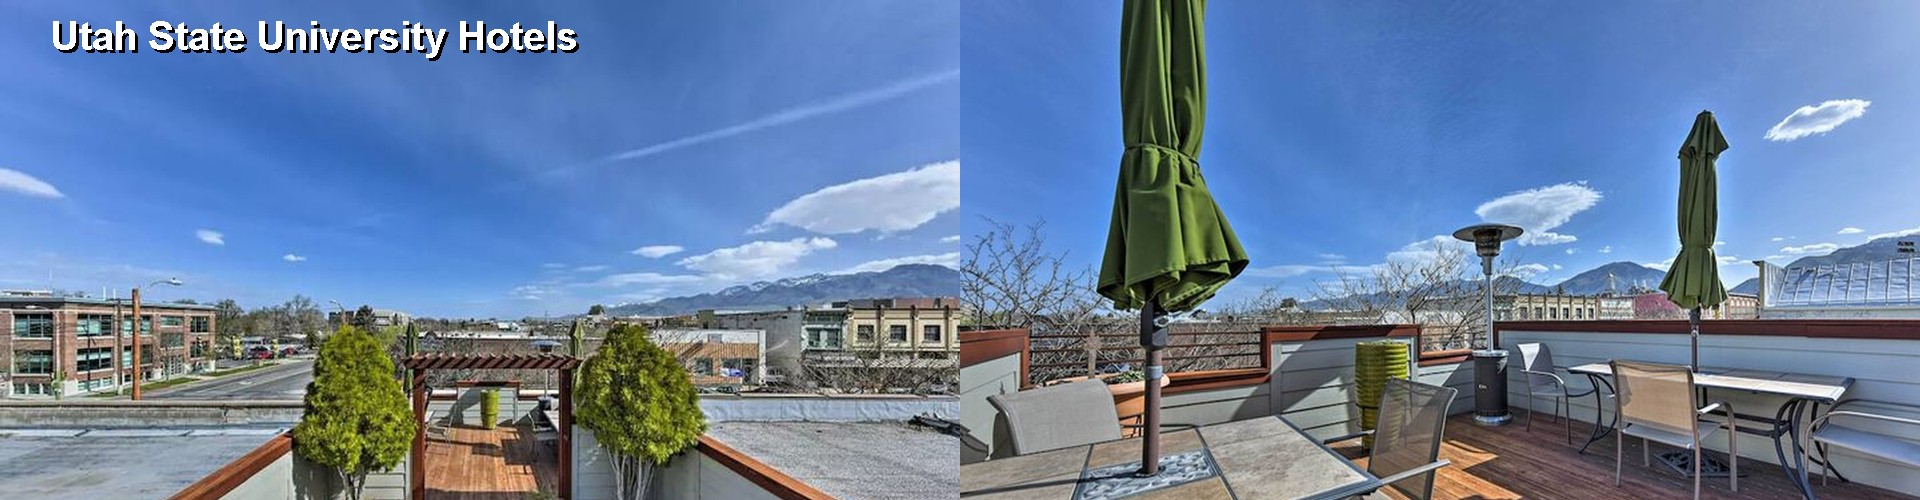 5 Best Hotels near Utah State University